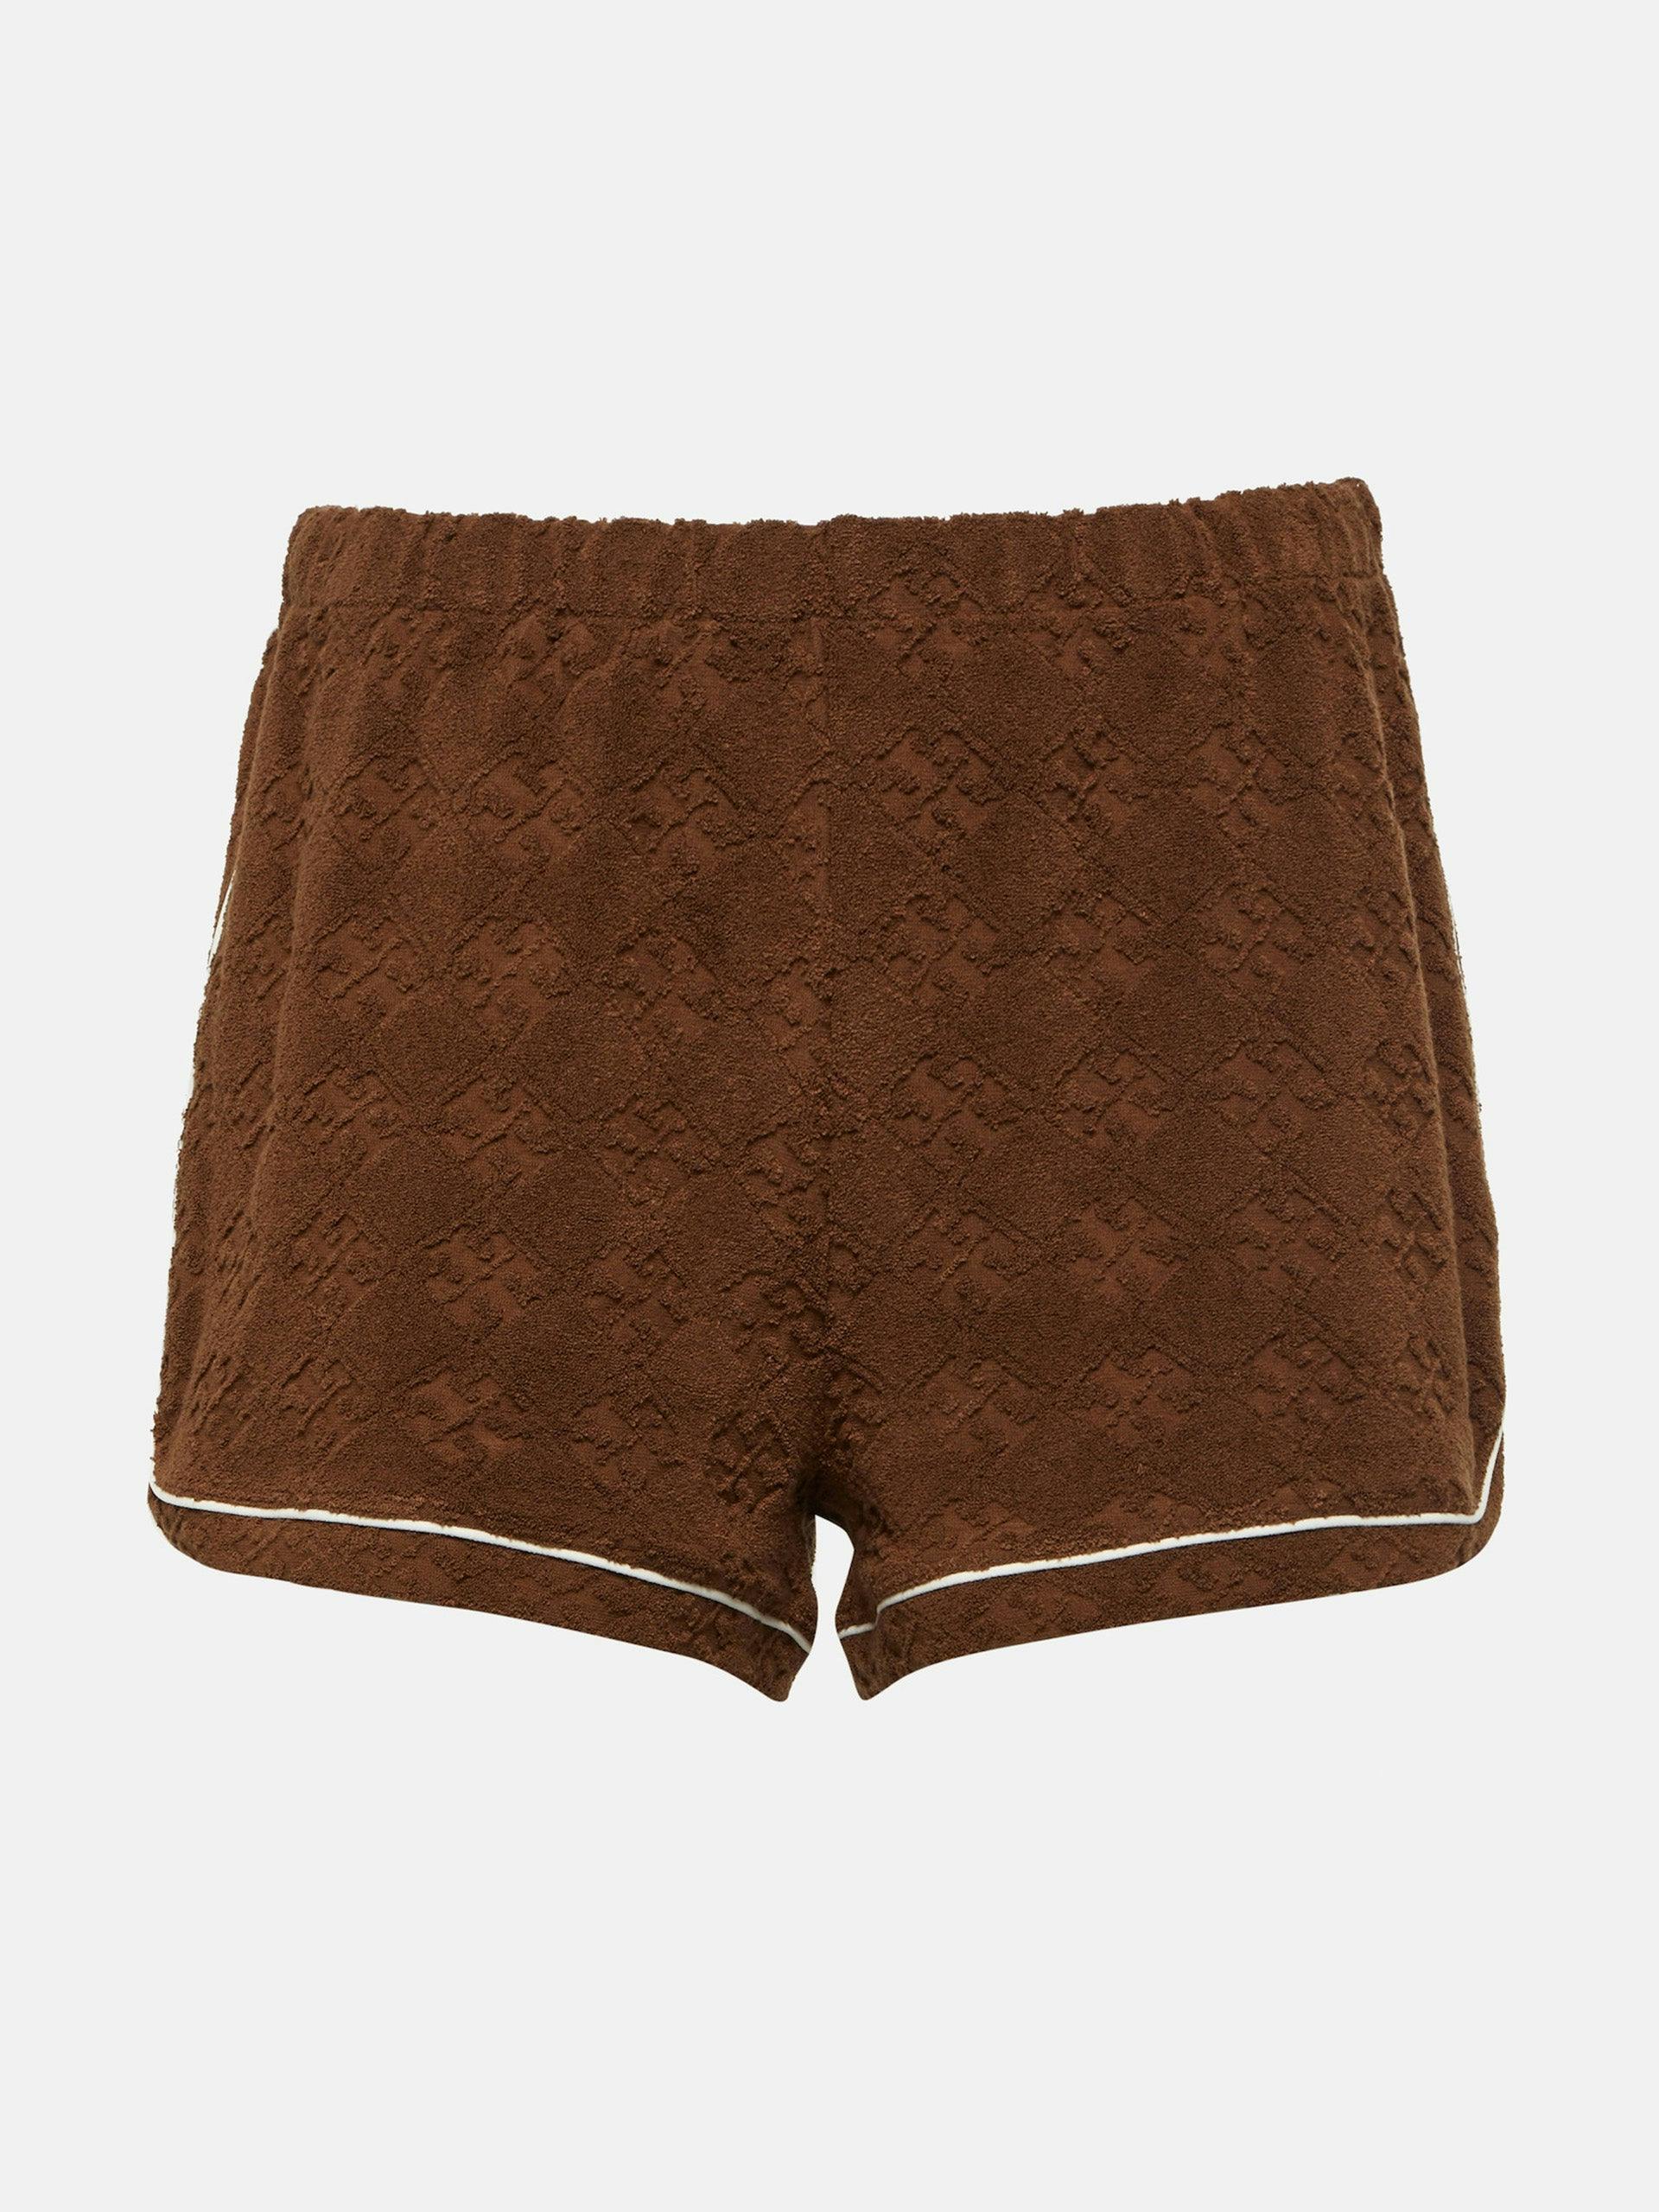 Jacquard terry brown shorts